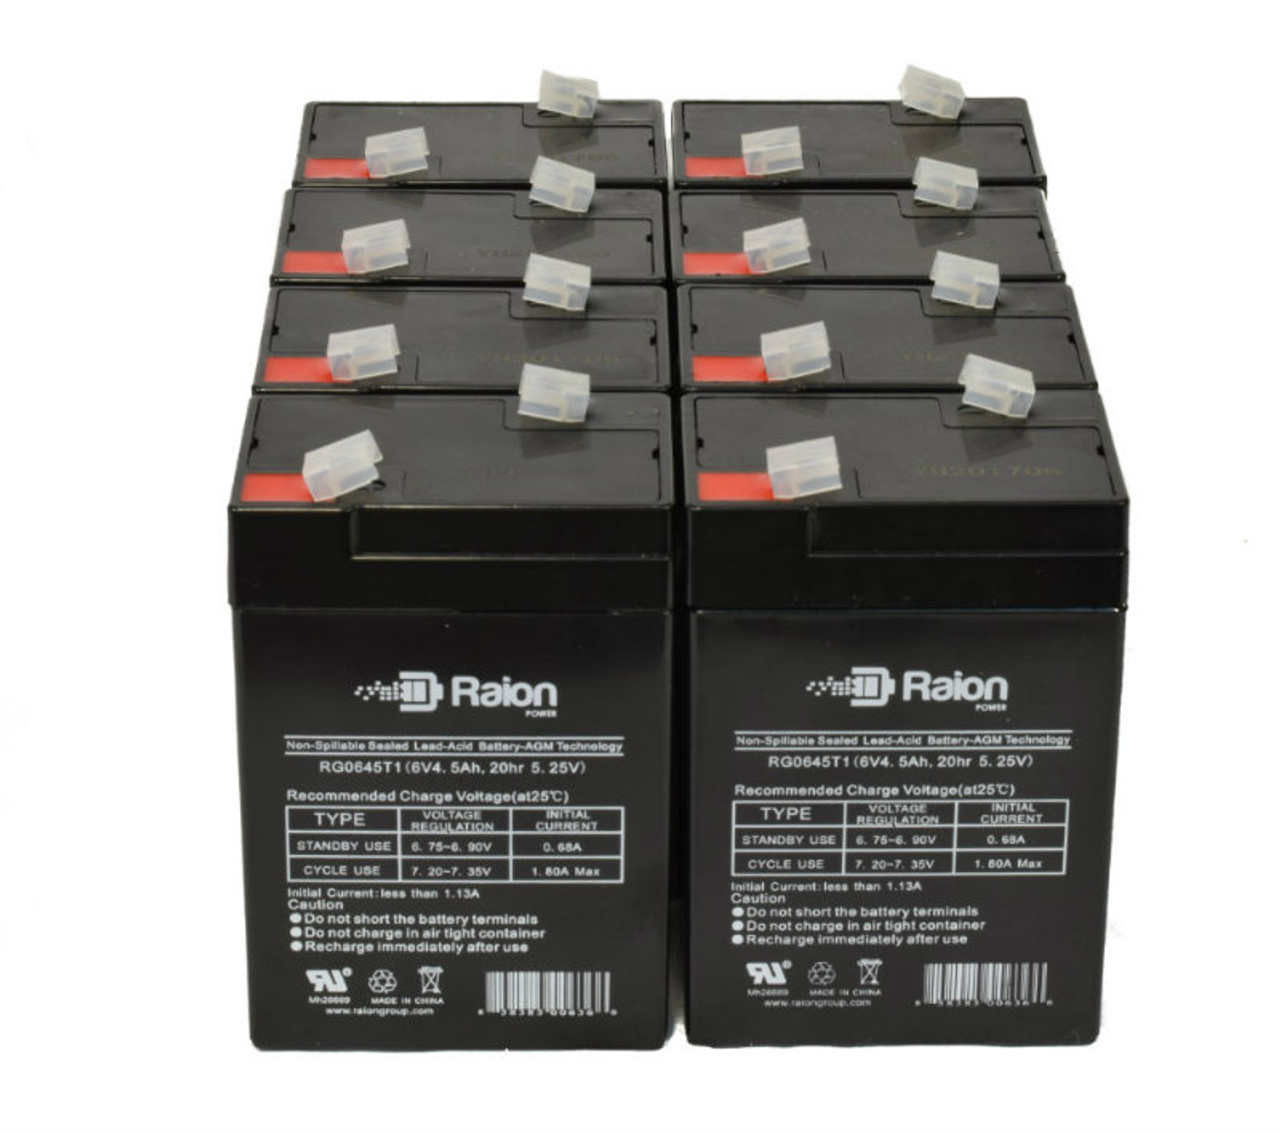 Raion Power 6 Volt 4.5Ah RG0645T1 Replacement Battery for Alexander G640 - 8 Pack